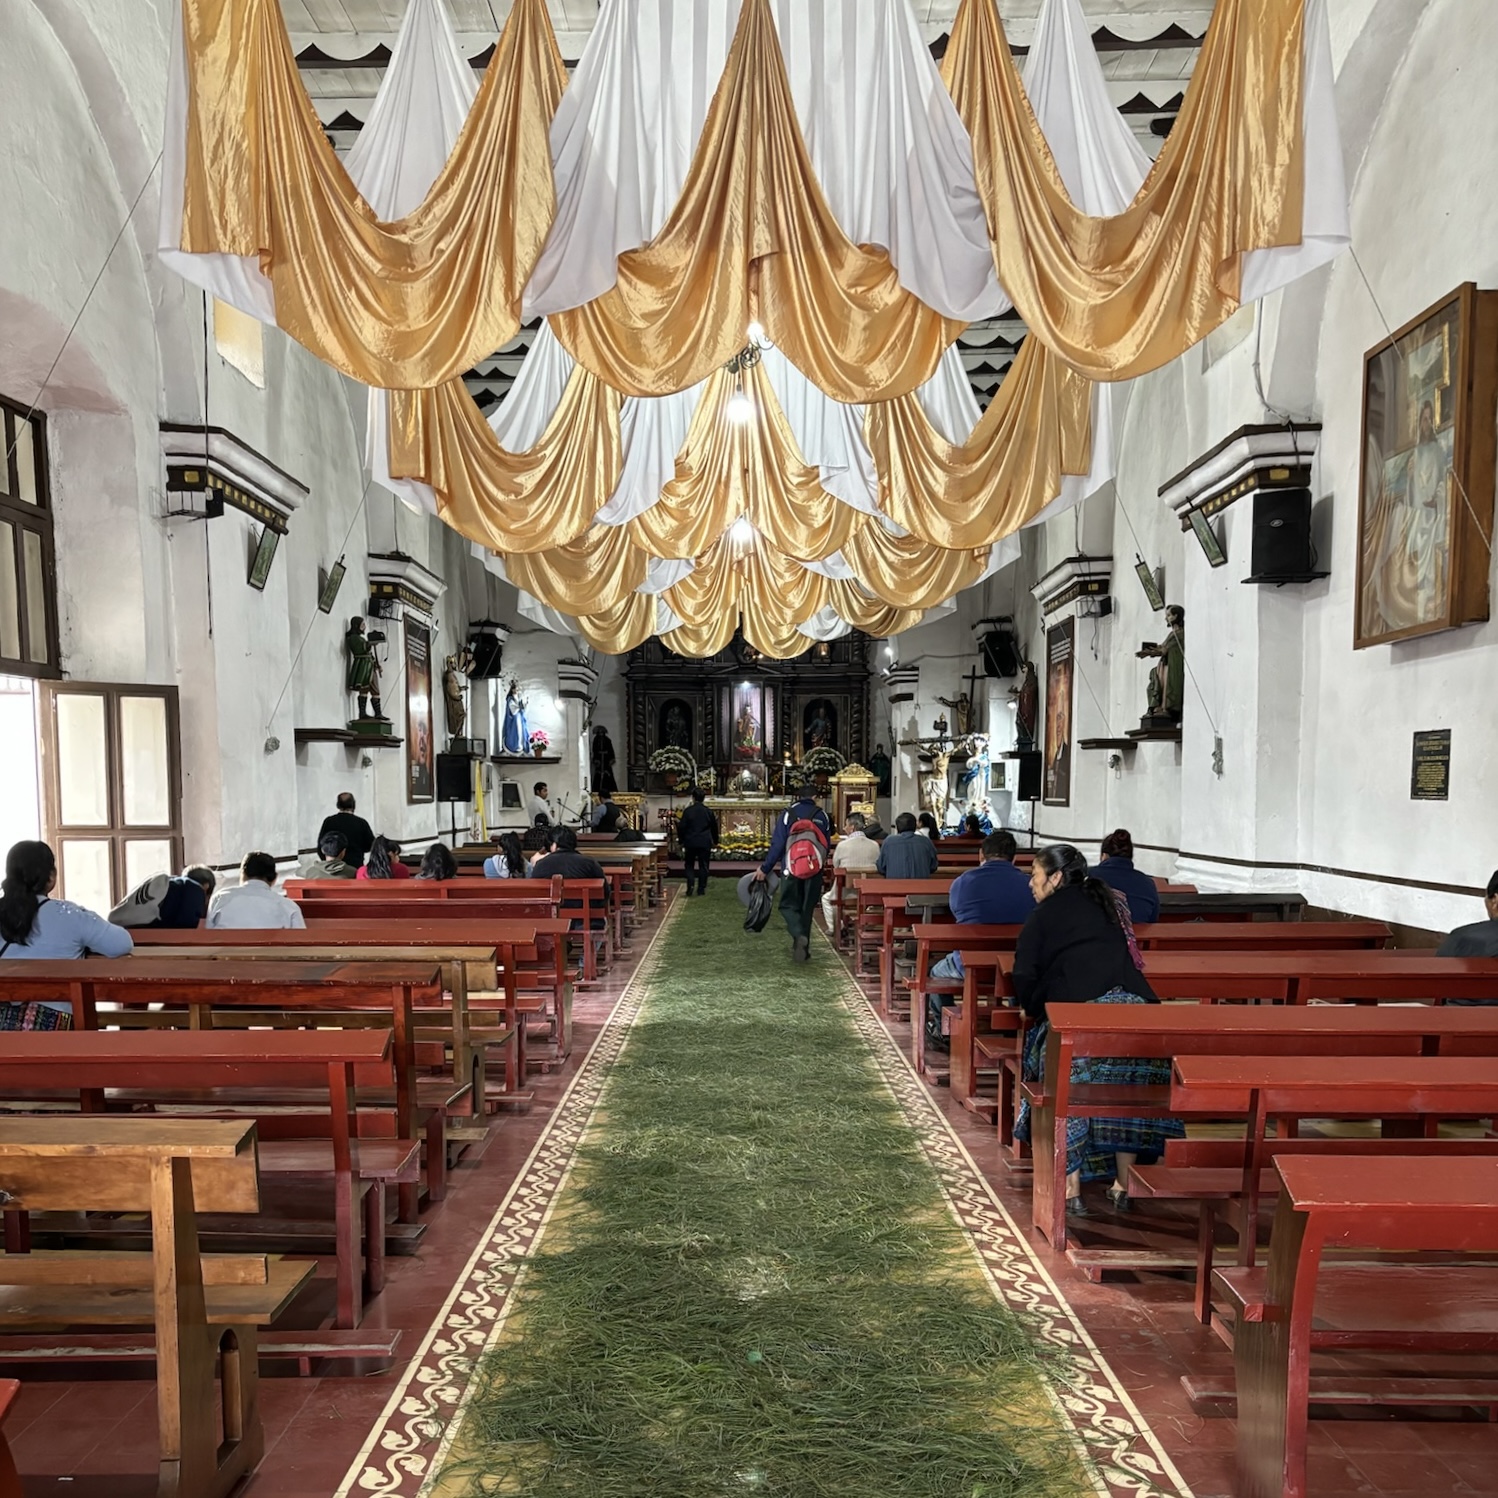 Interior of a church in Guatemala